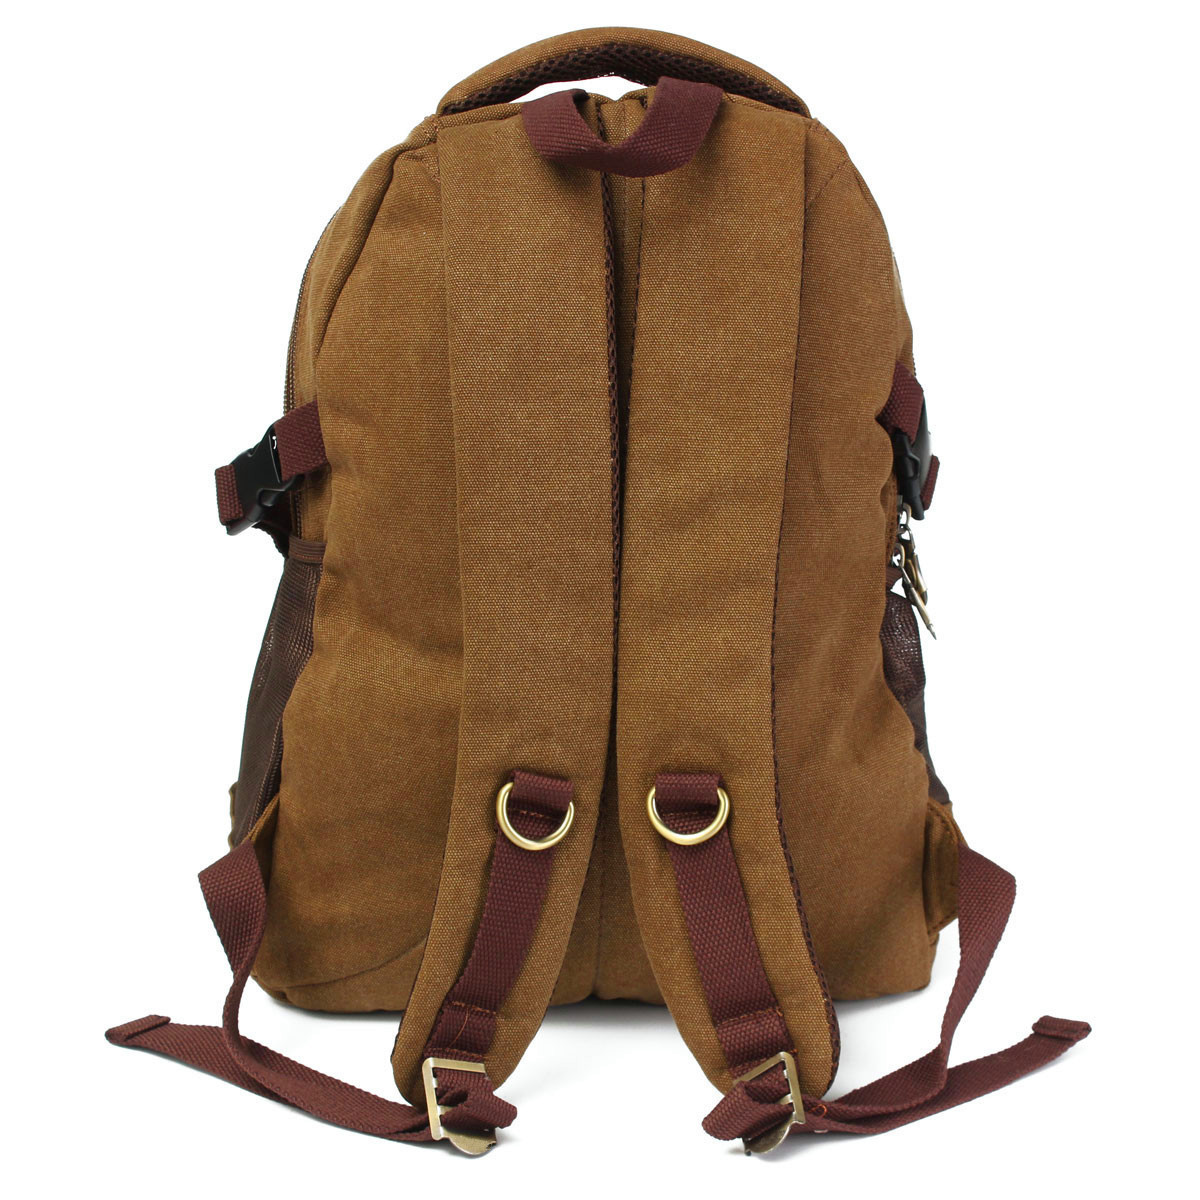 Men Women Vintage Canvas Backpack Large Capacity Multi-Pockets Rucksack Outdoor Travel Hiking Laptop Bag